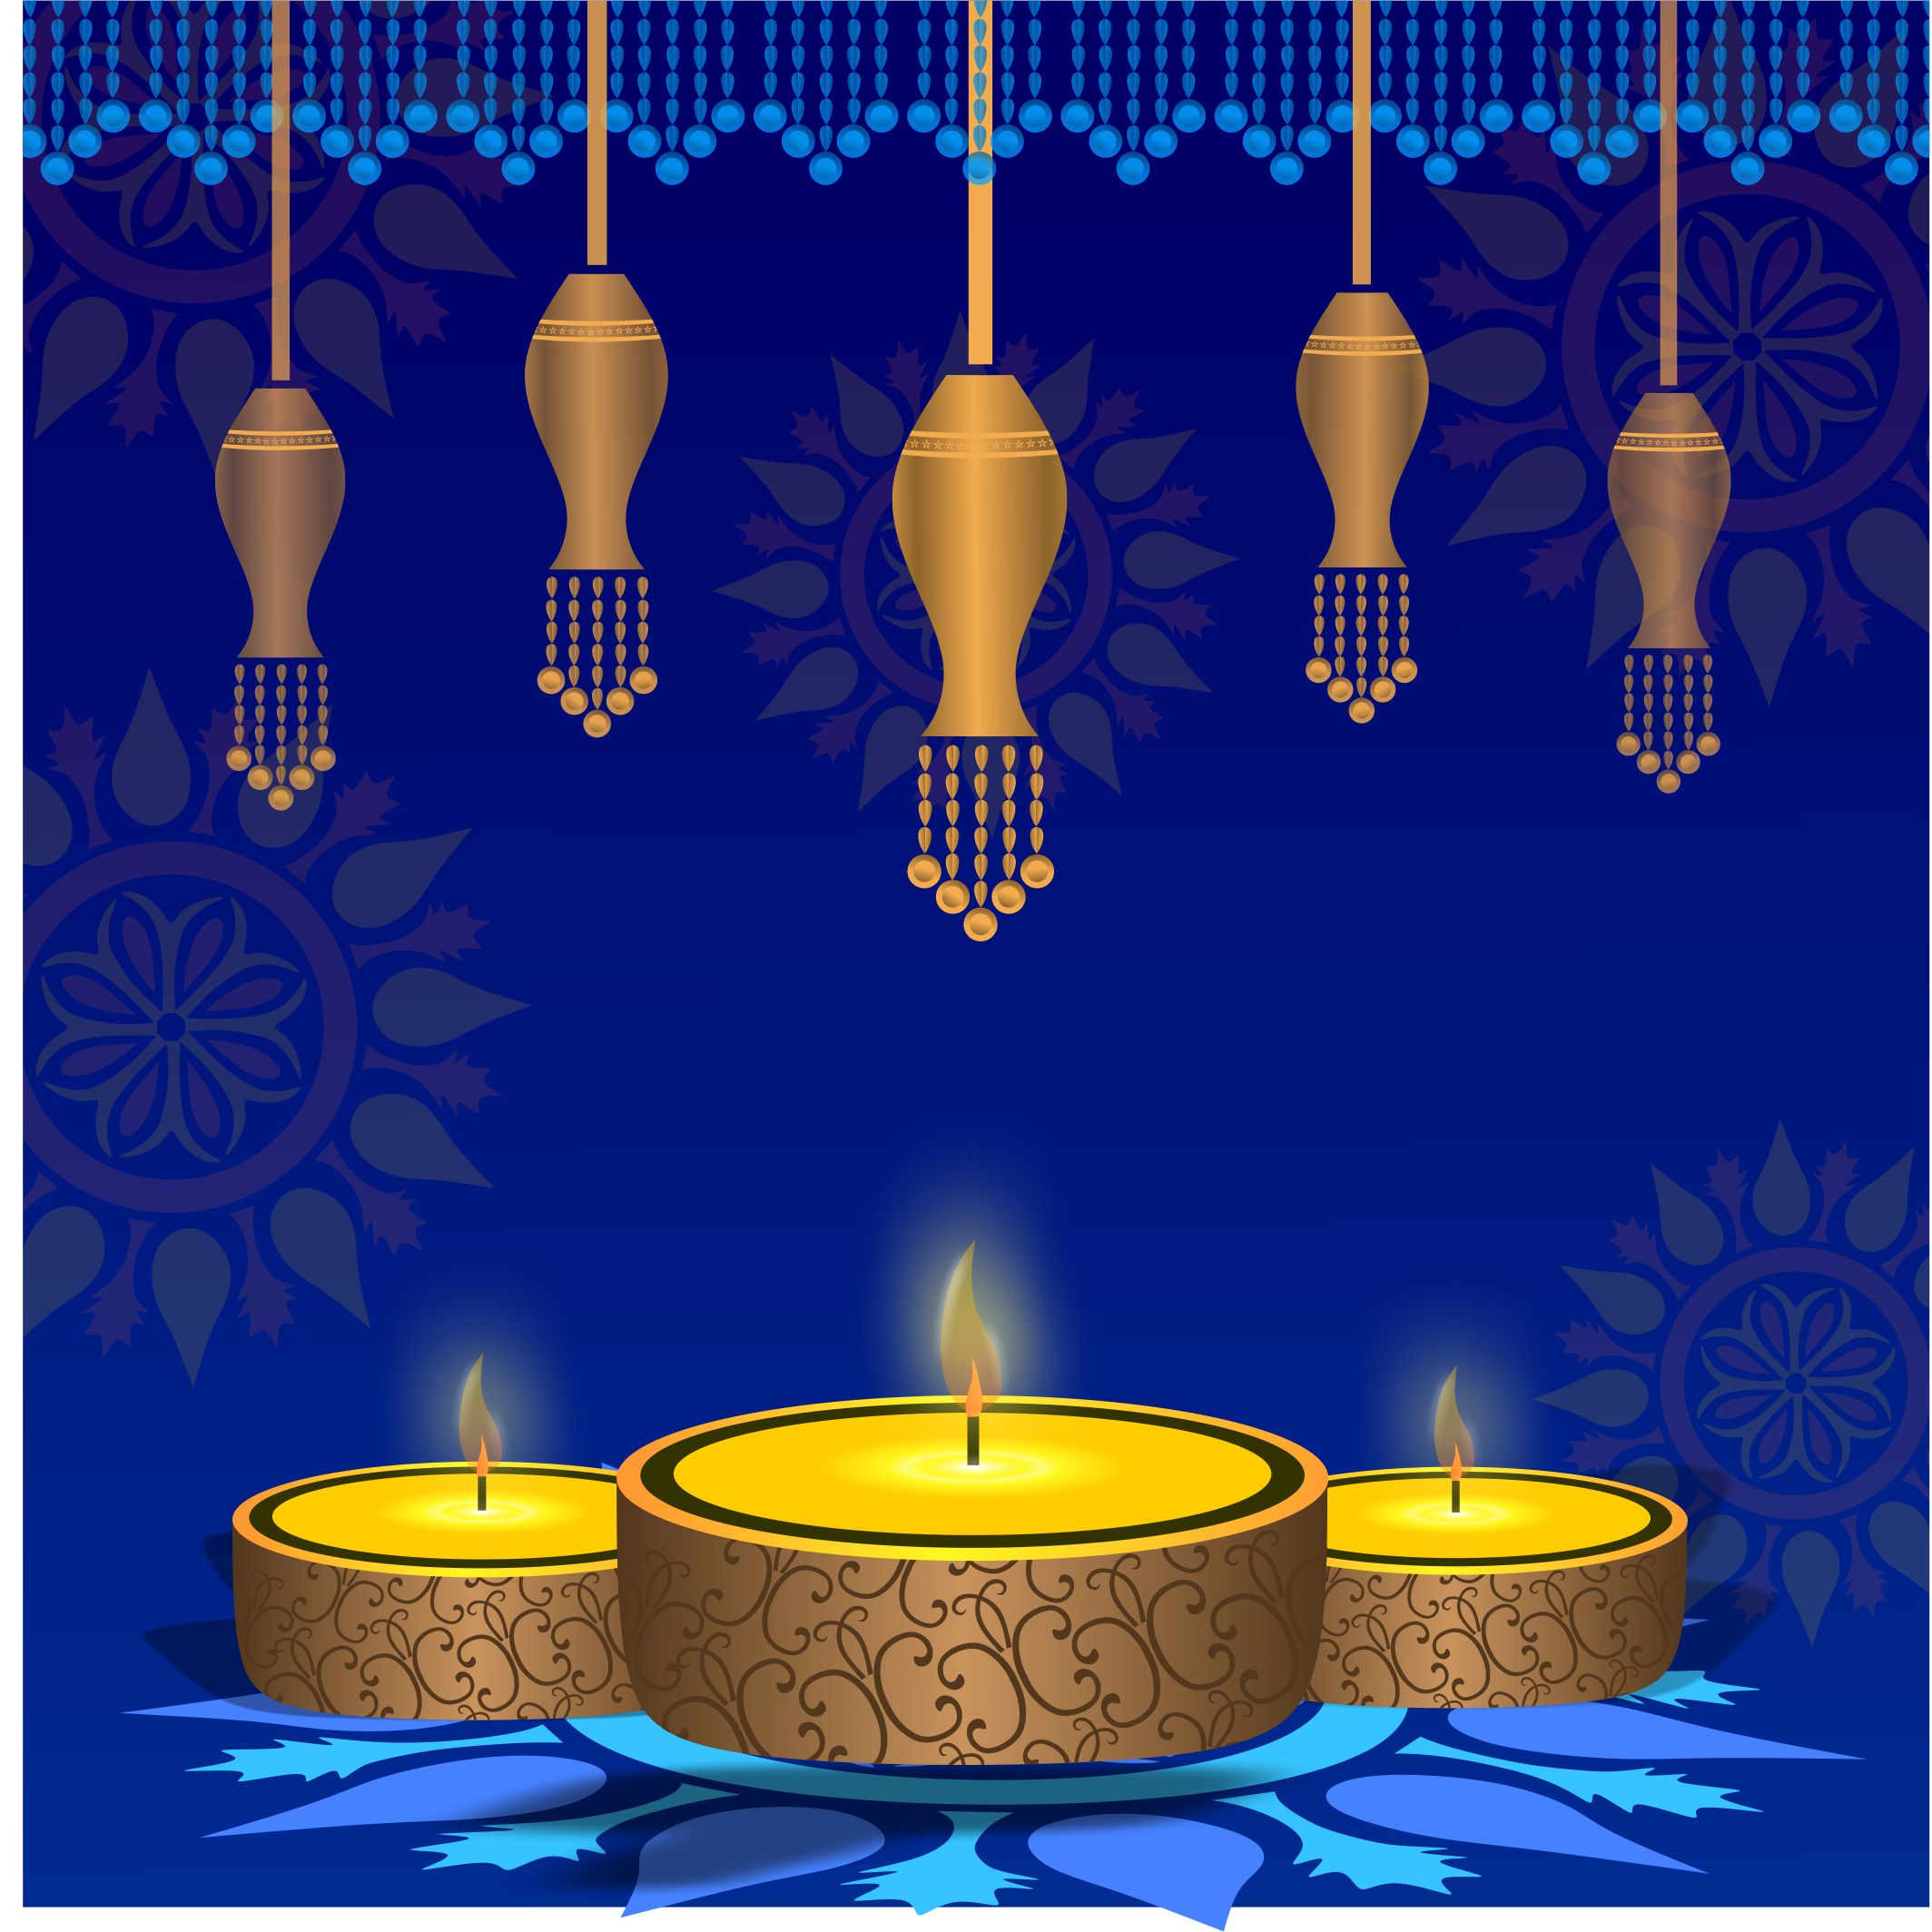 Diwali design cdr file with blue background - TR BAHADURPUR